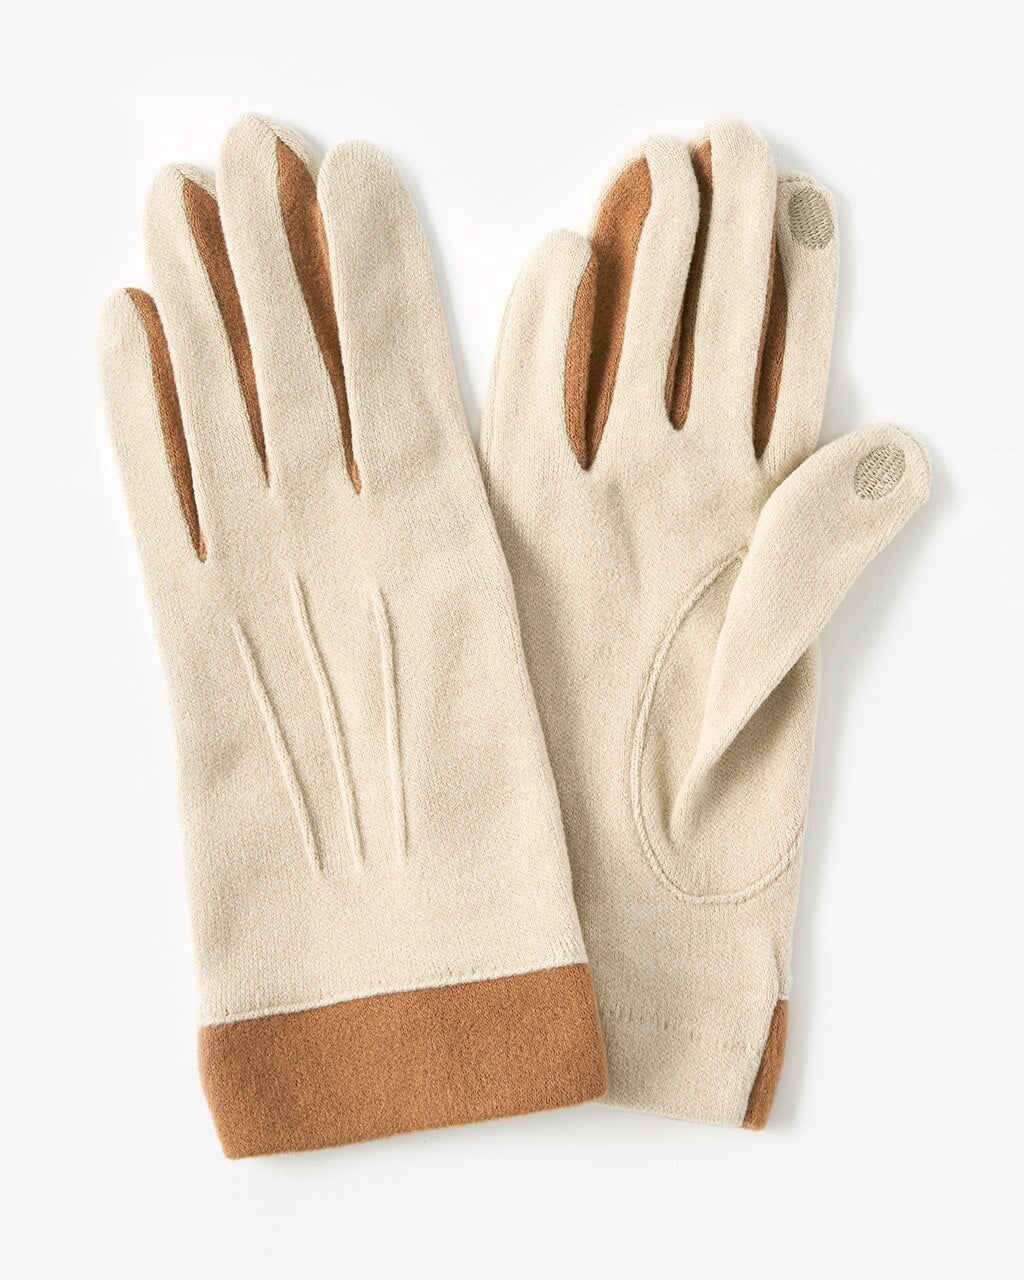 Doガード・抗ウイルス保湿手袋/40代50代からのレディース・メンズ